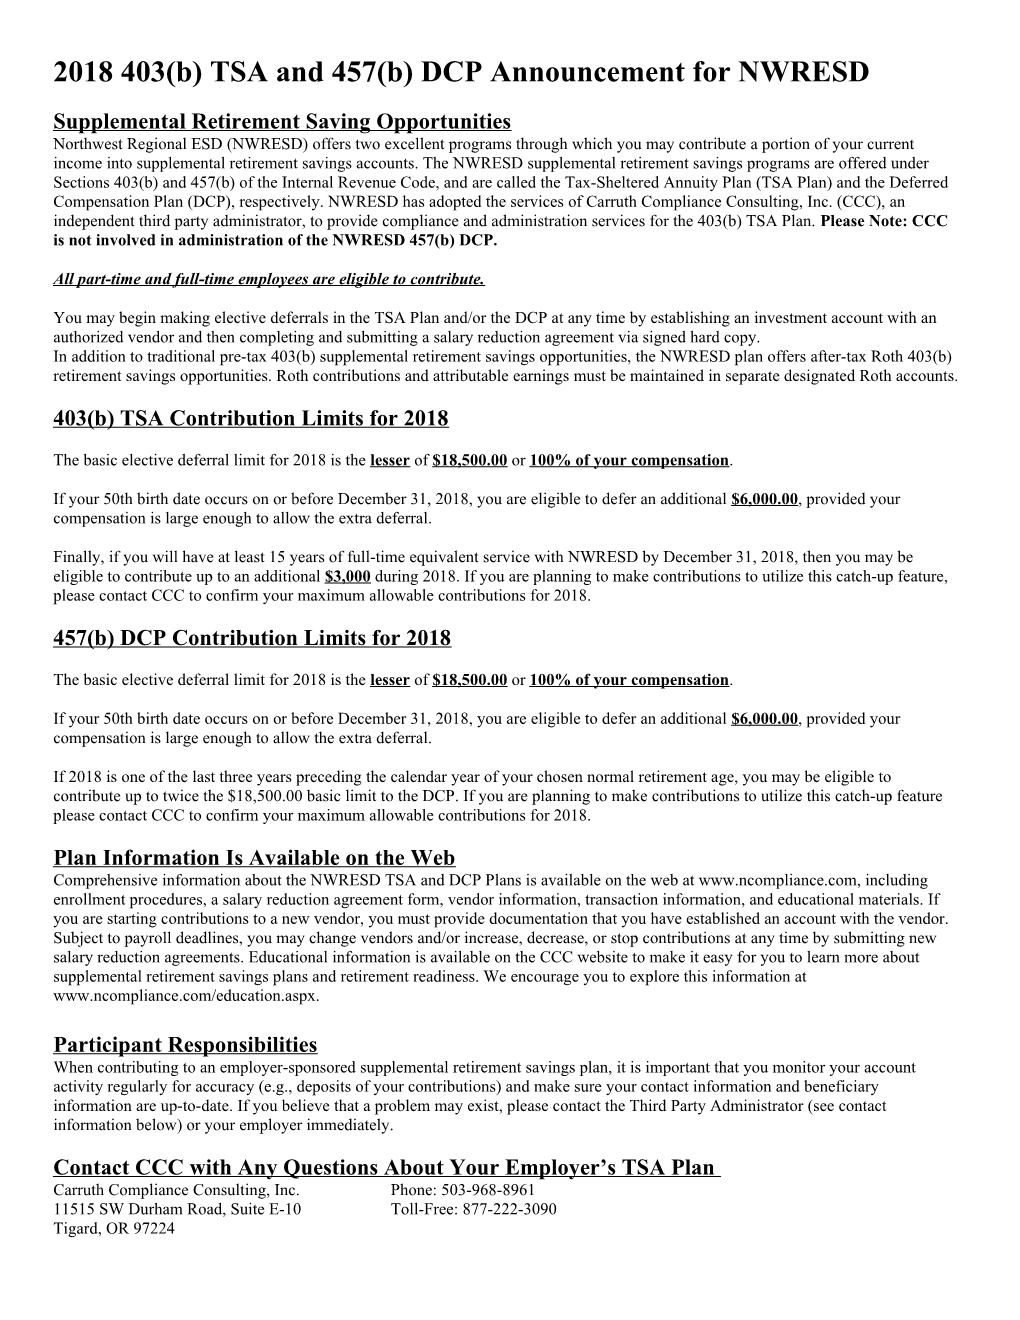 2018 403(B) TSA and 457(B) DCP Announcement for NWRESD